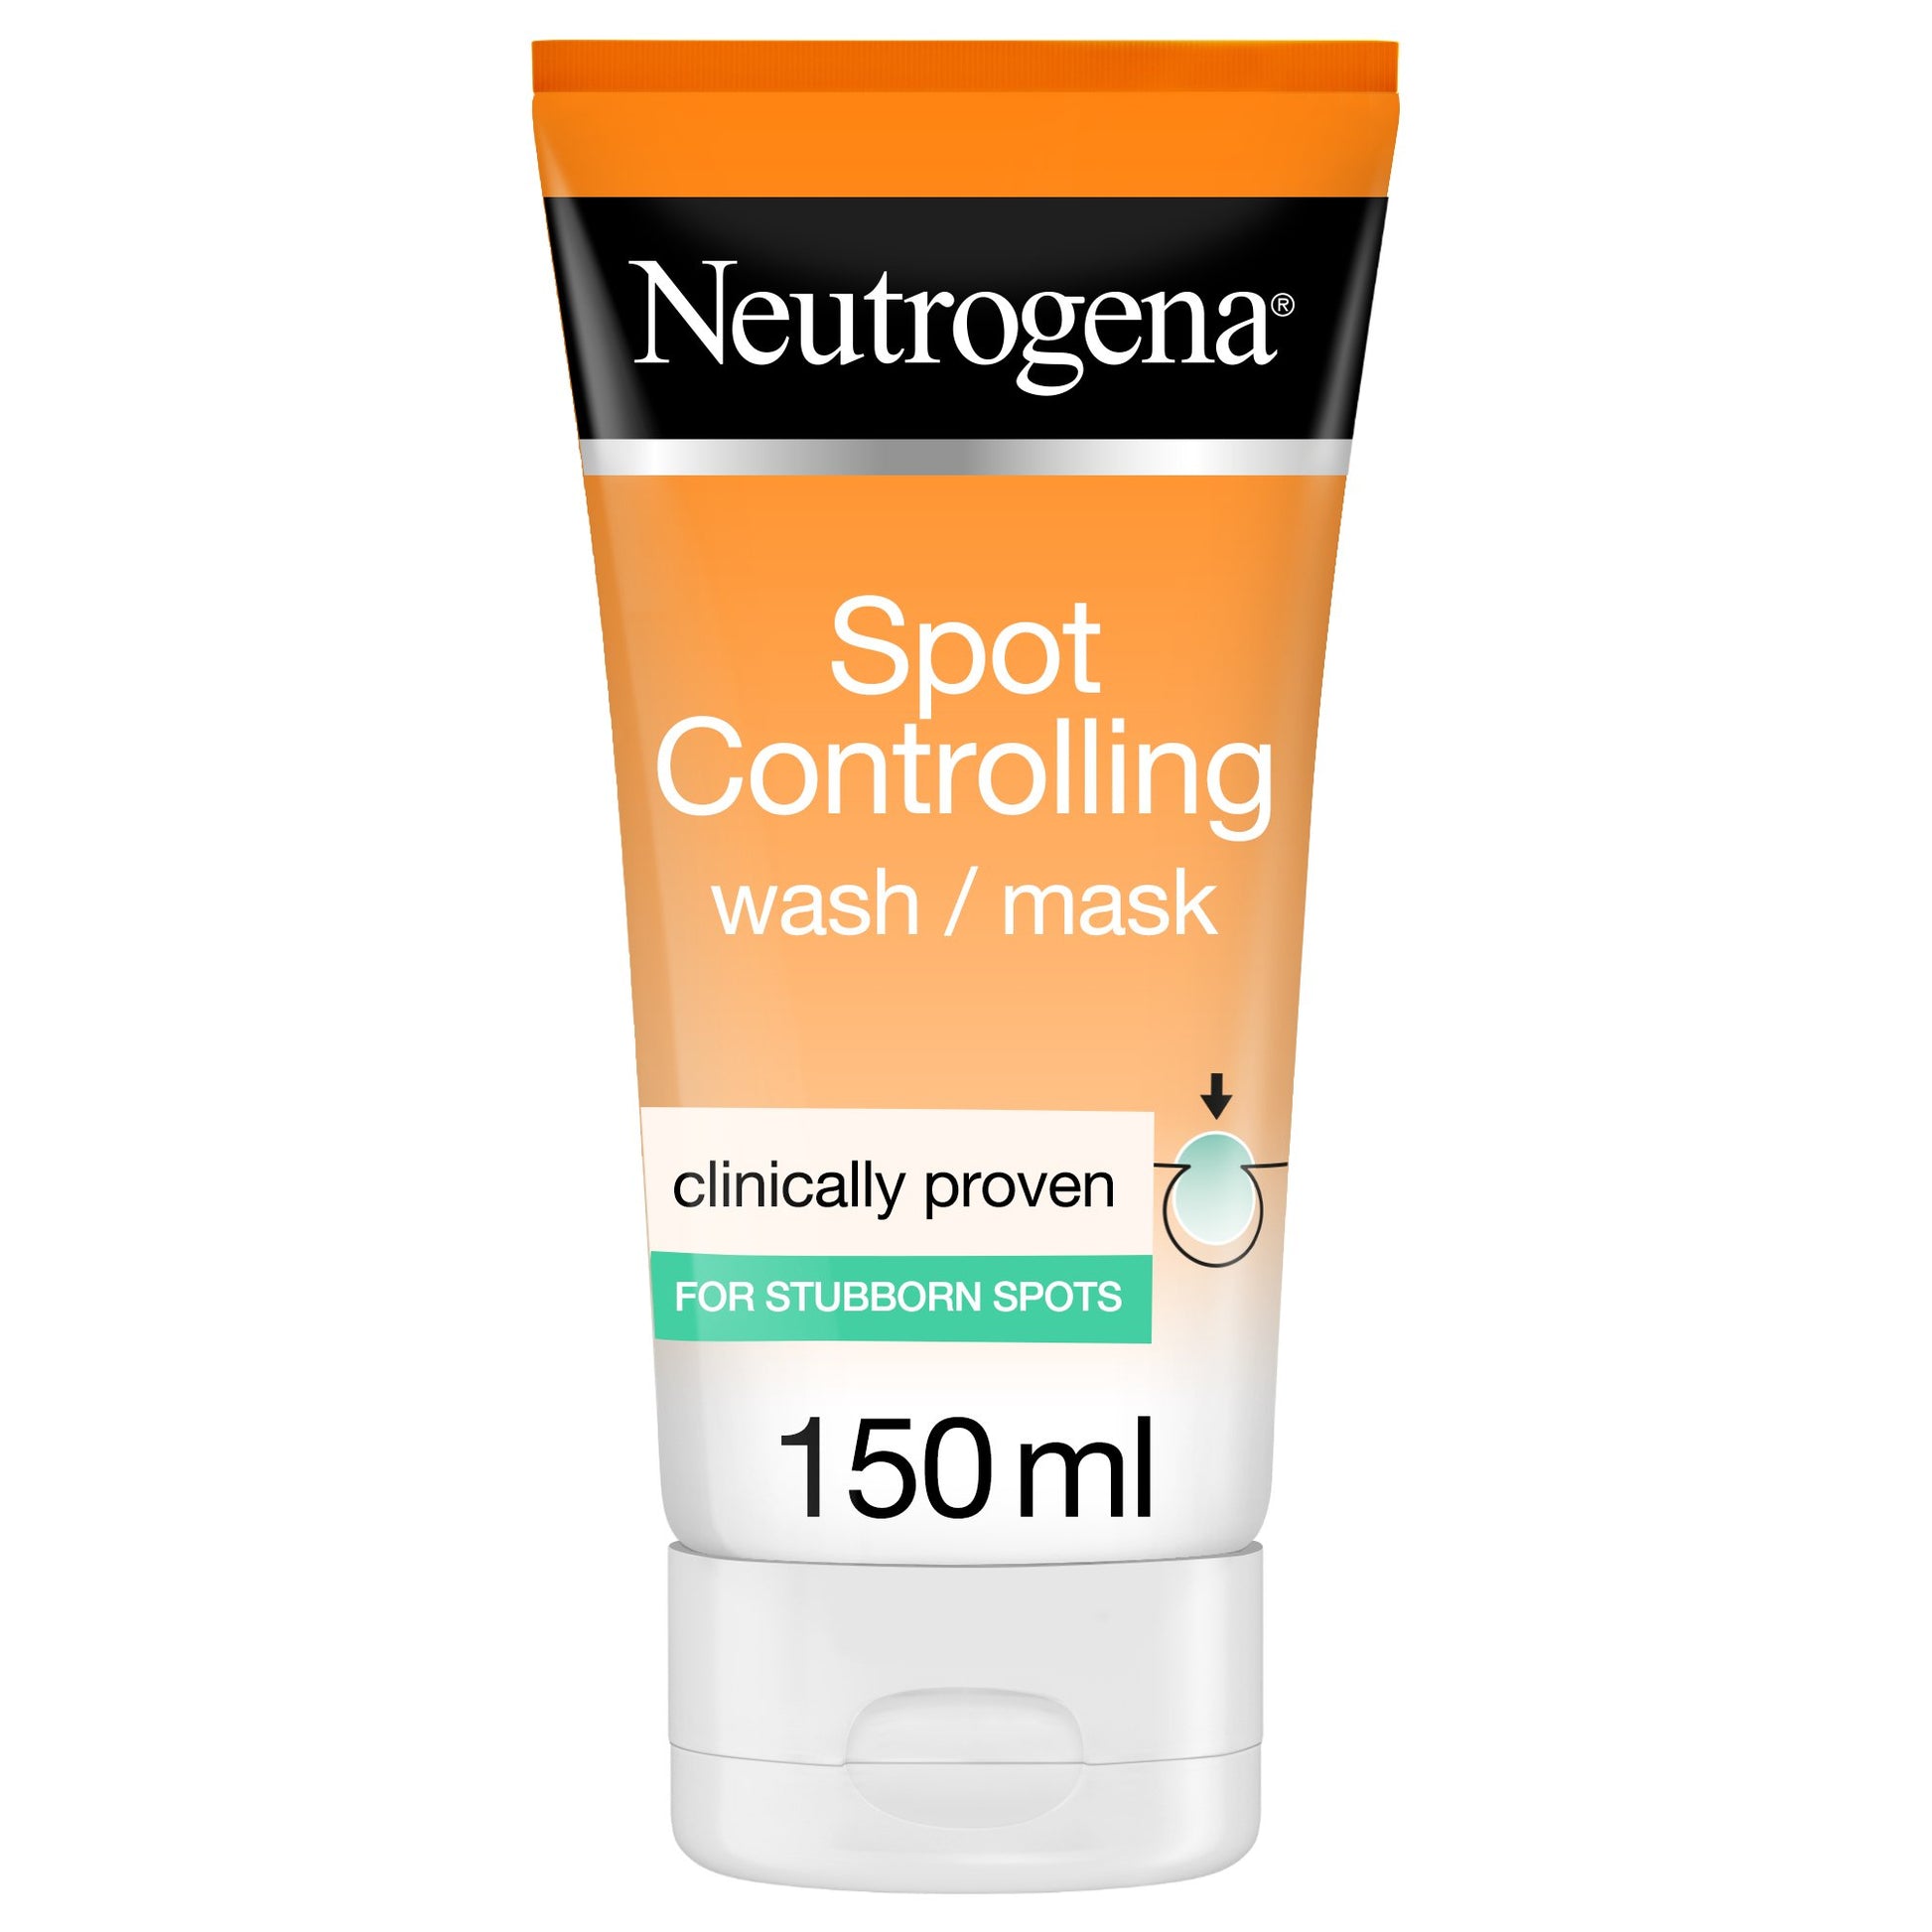 Neutrogena spot controlling wash / mask 150 ml